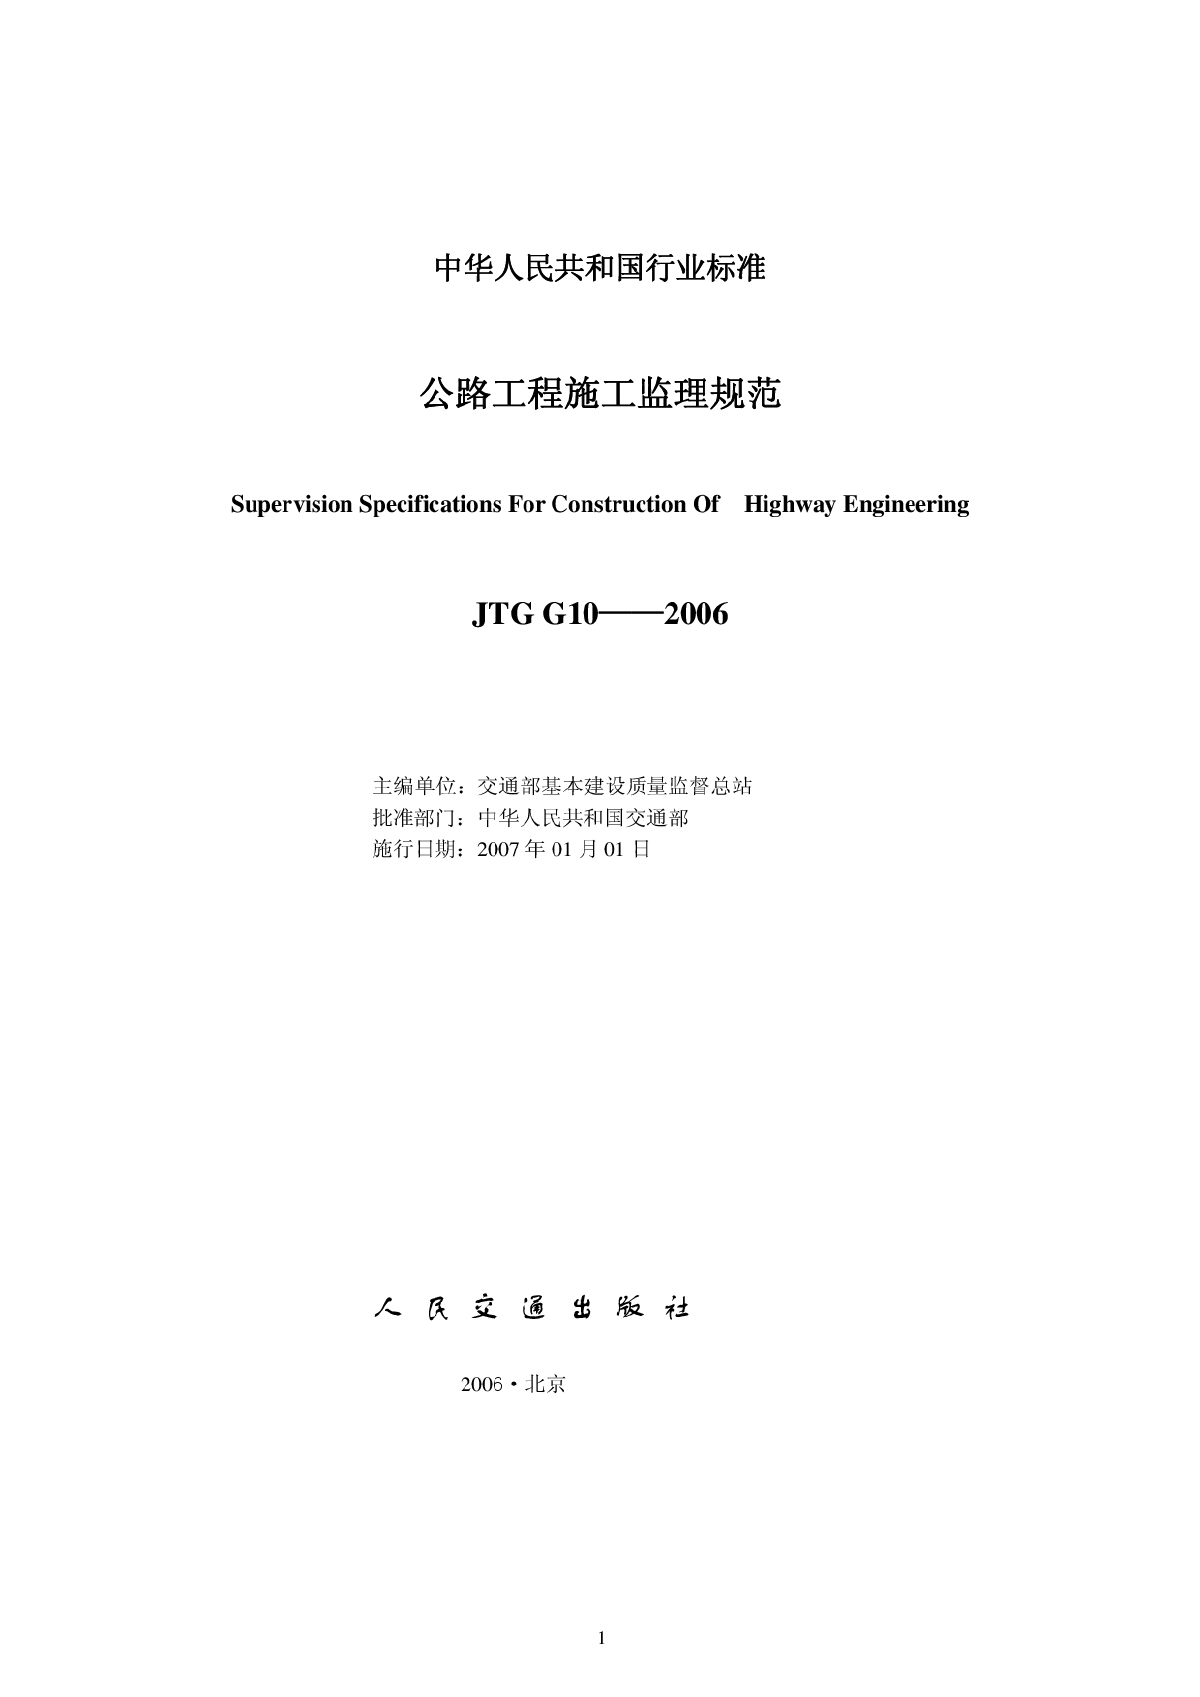 JTG G10—2006公路工程施工监理规范-图二